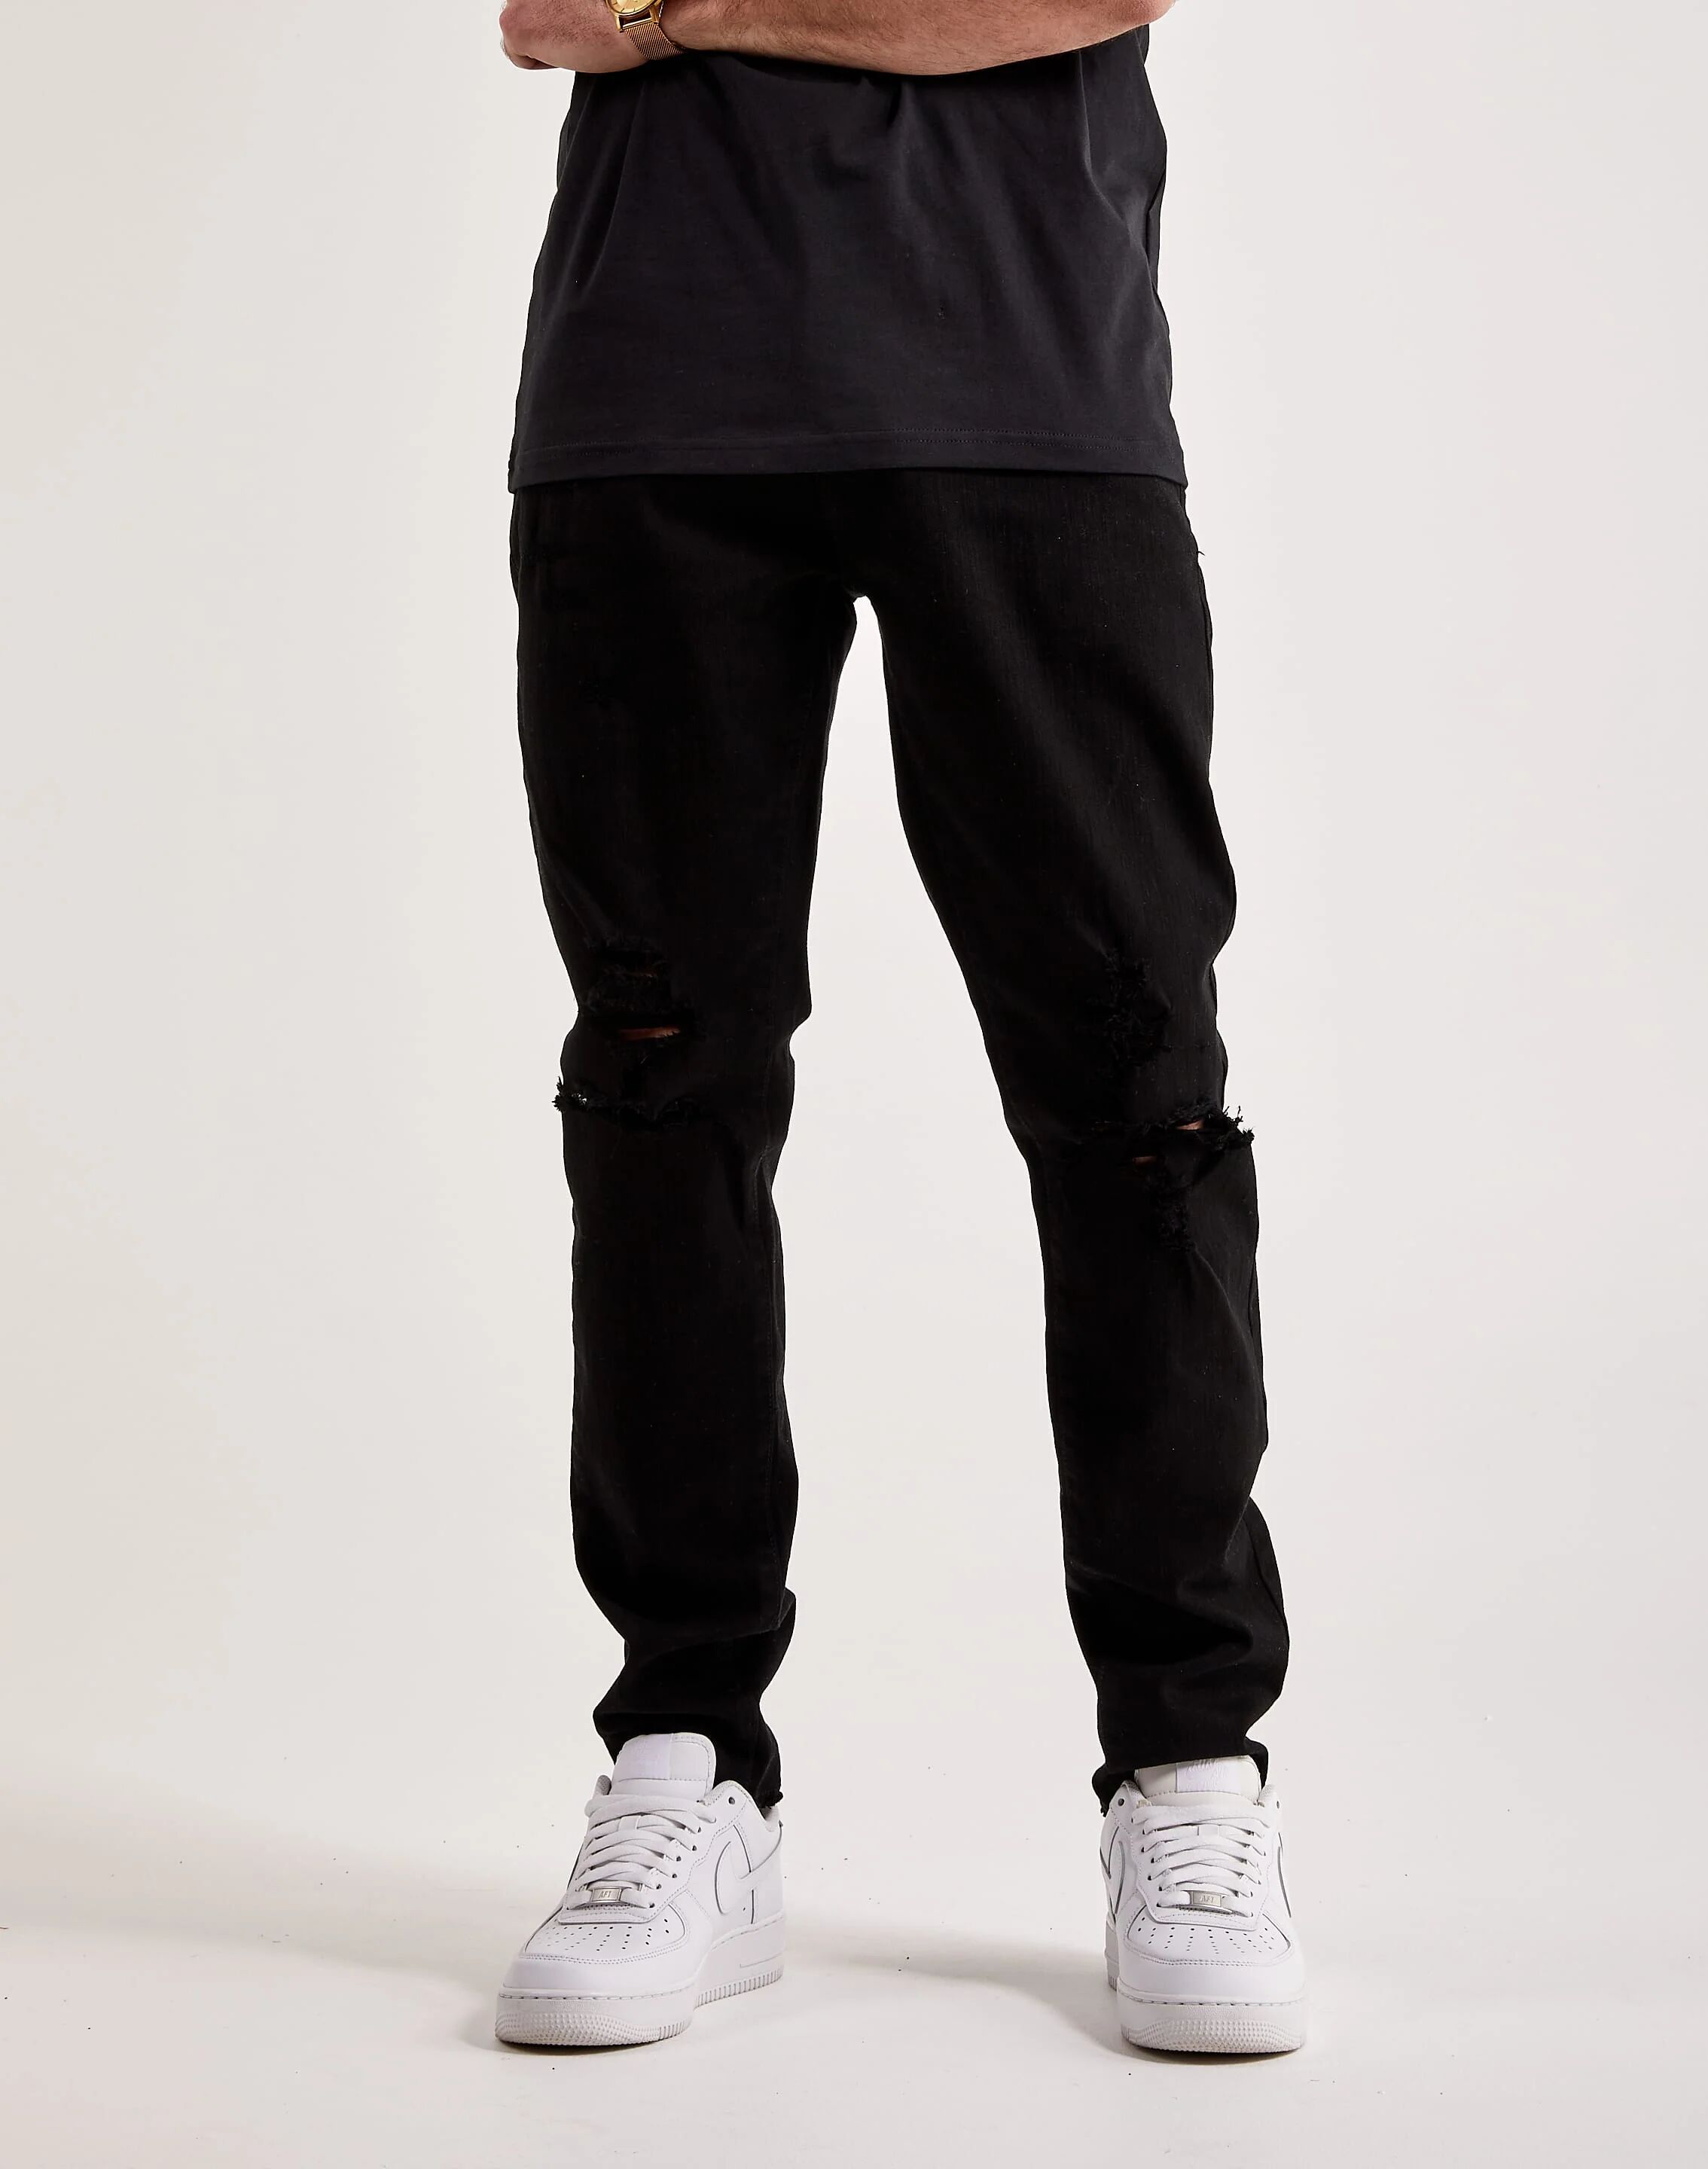 Jordan Craig Basic Ross Jeans  - Black - Size: 36/32